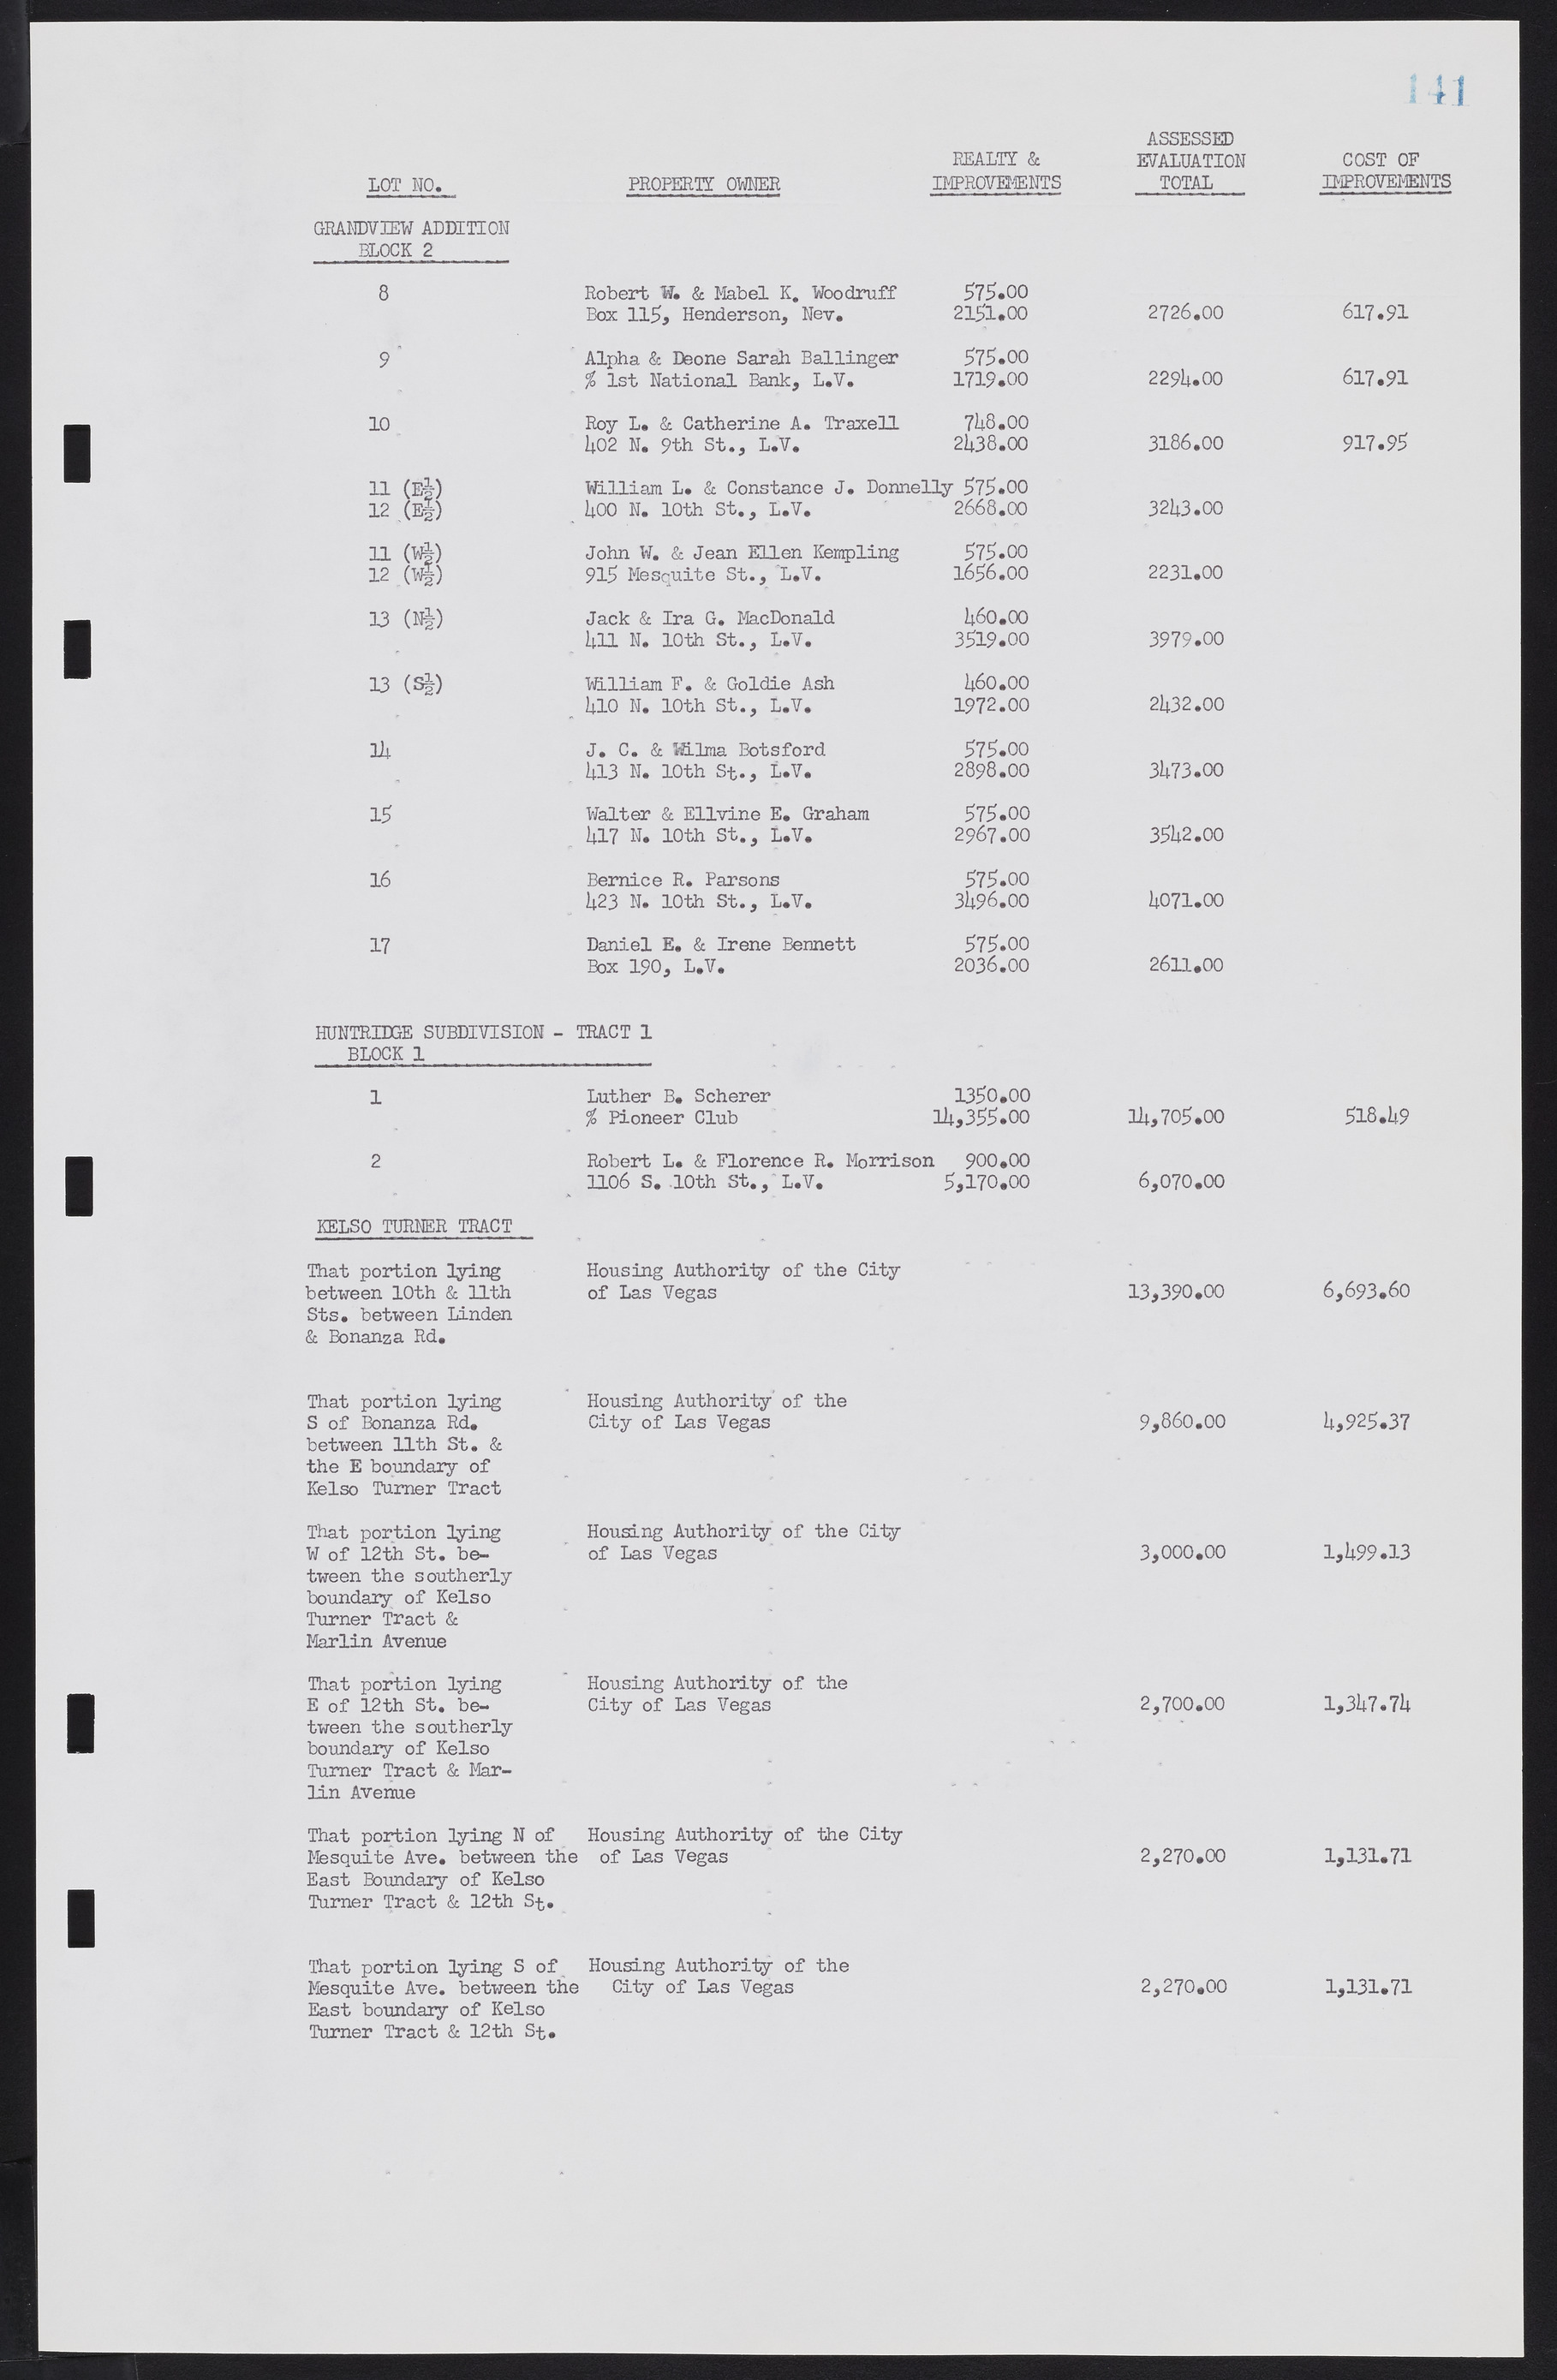 Las Vegas City Commission Minutes, February 17, 1954 to September 21, 1955, lvc000009-145